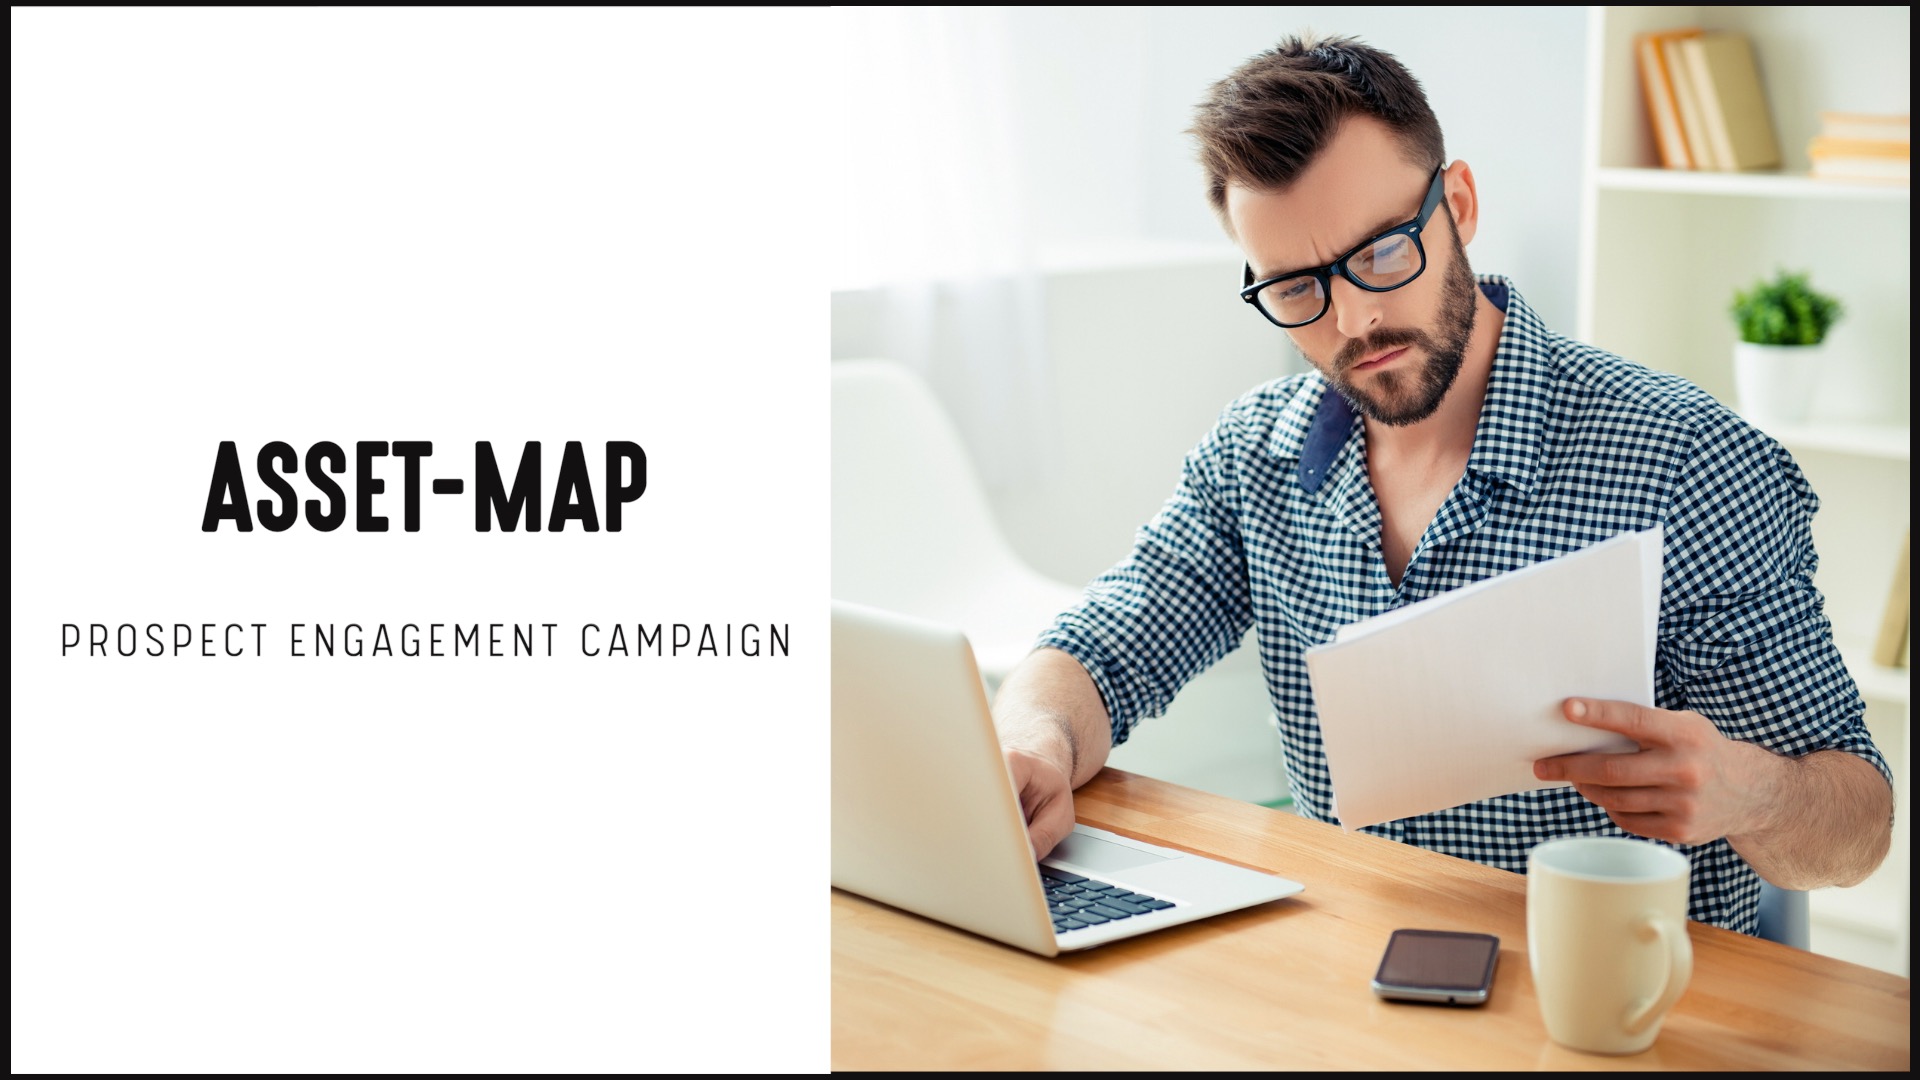 [NEW] Prospect Engagement Campaign | Asset-Map